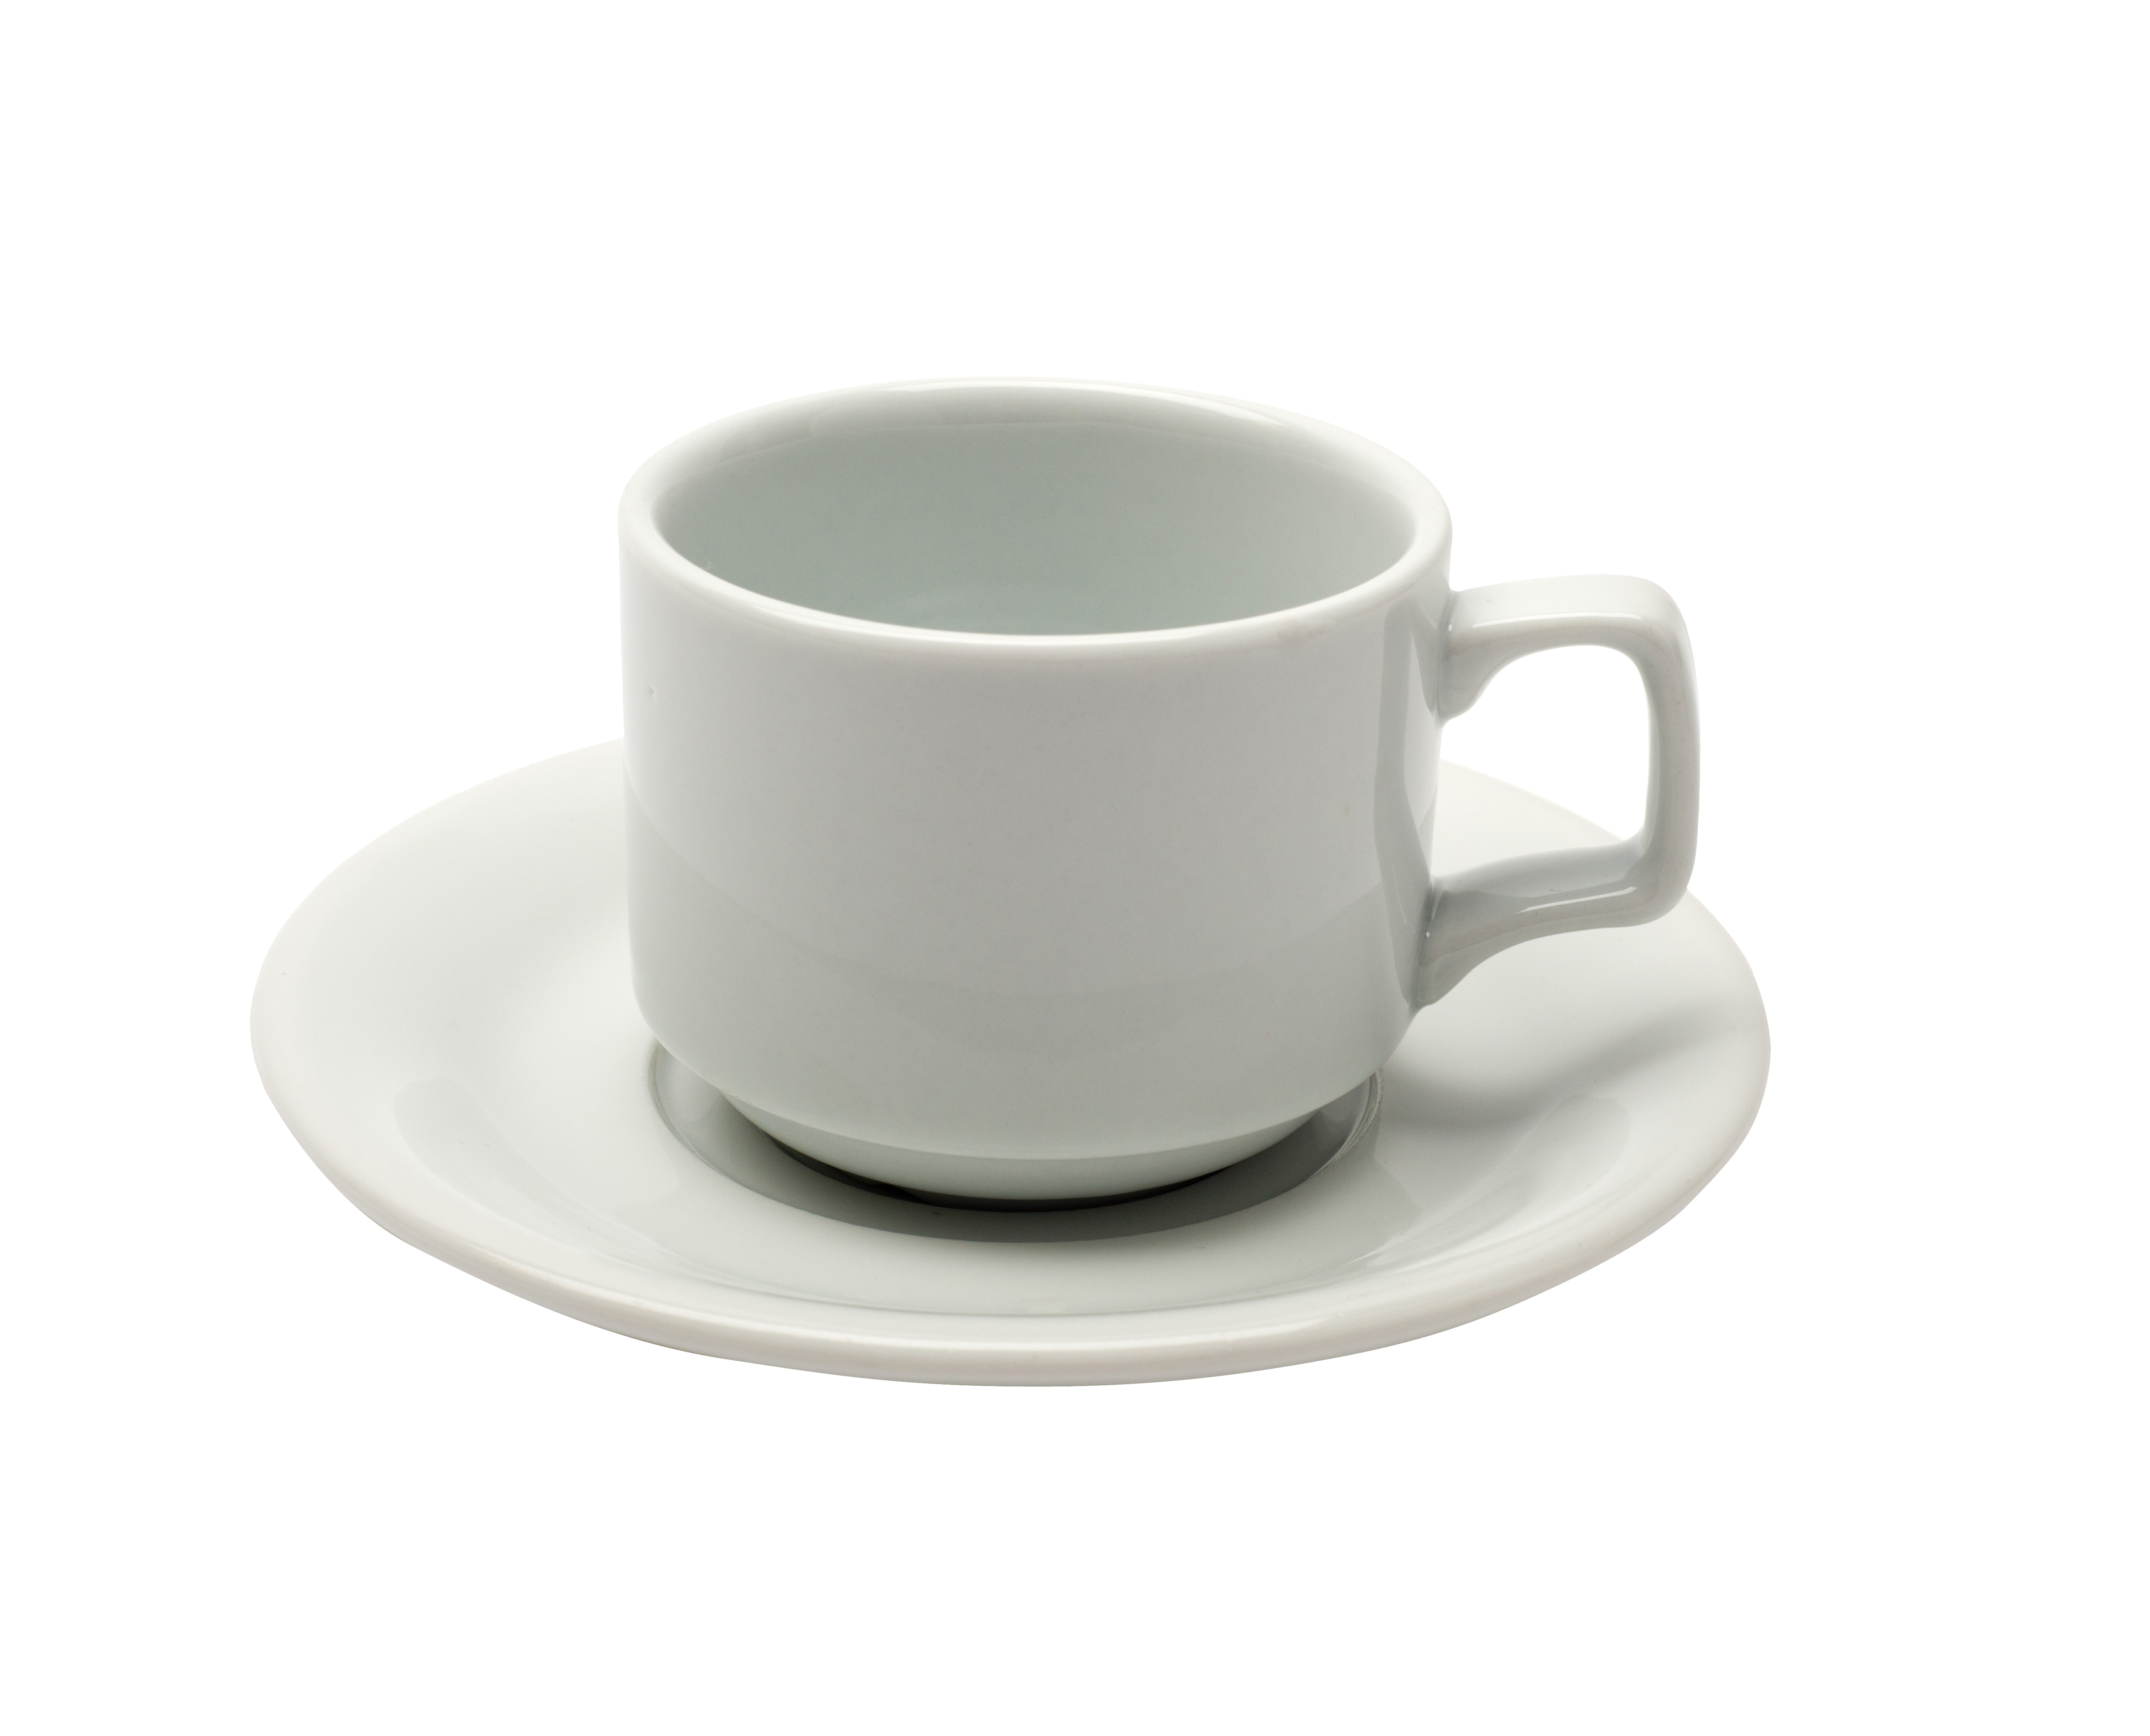 category_A3010 - Tea / Coffee Cup 7oz